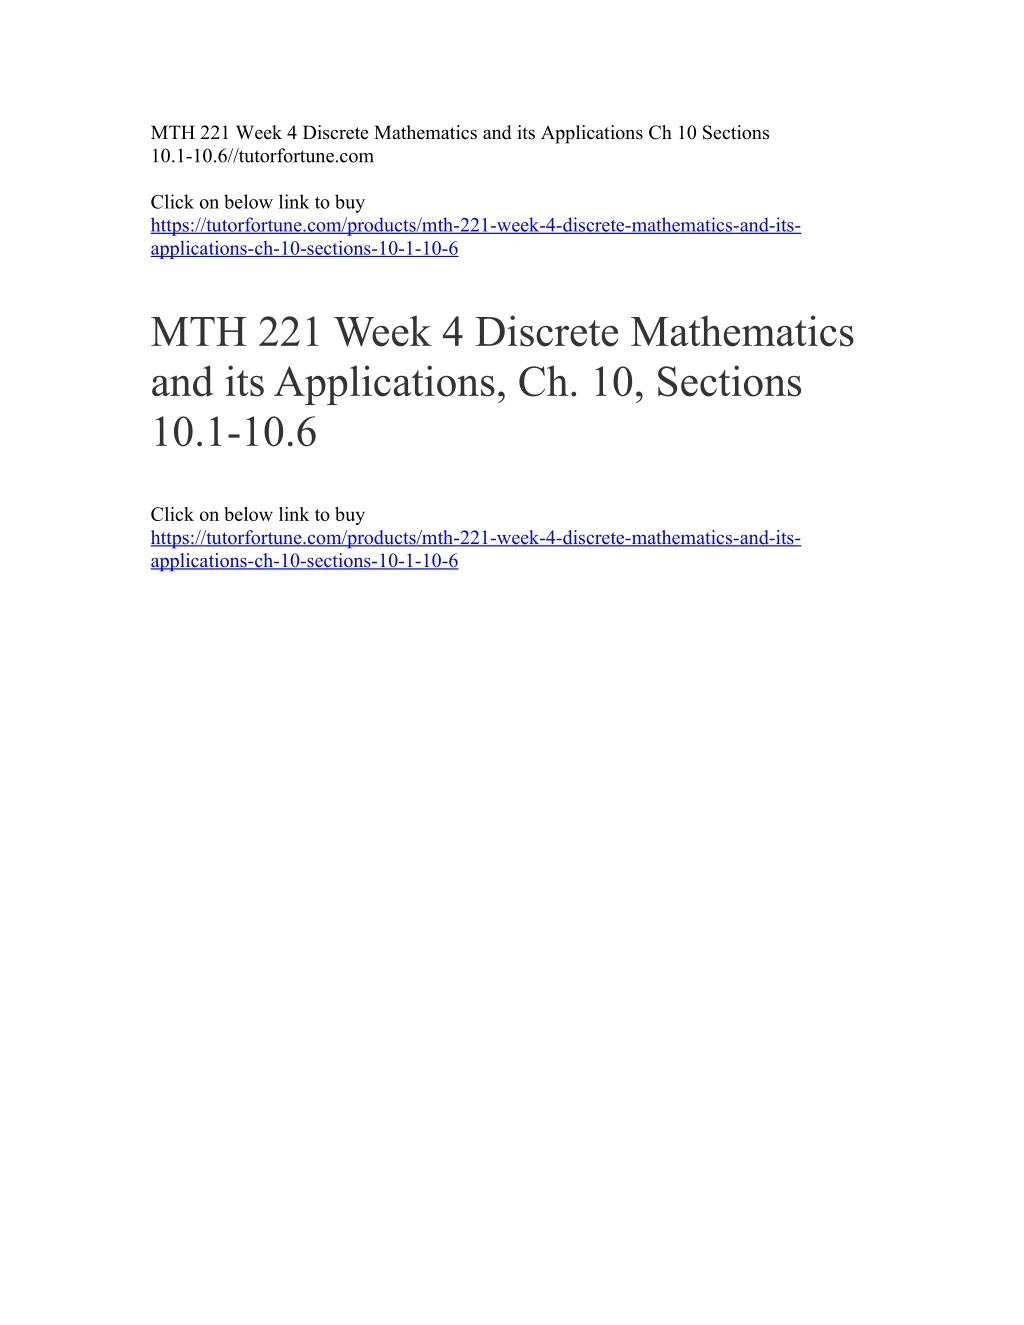 mth 221 week 4 discrete mathematics